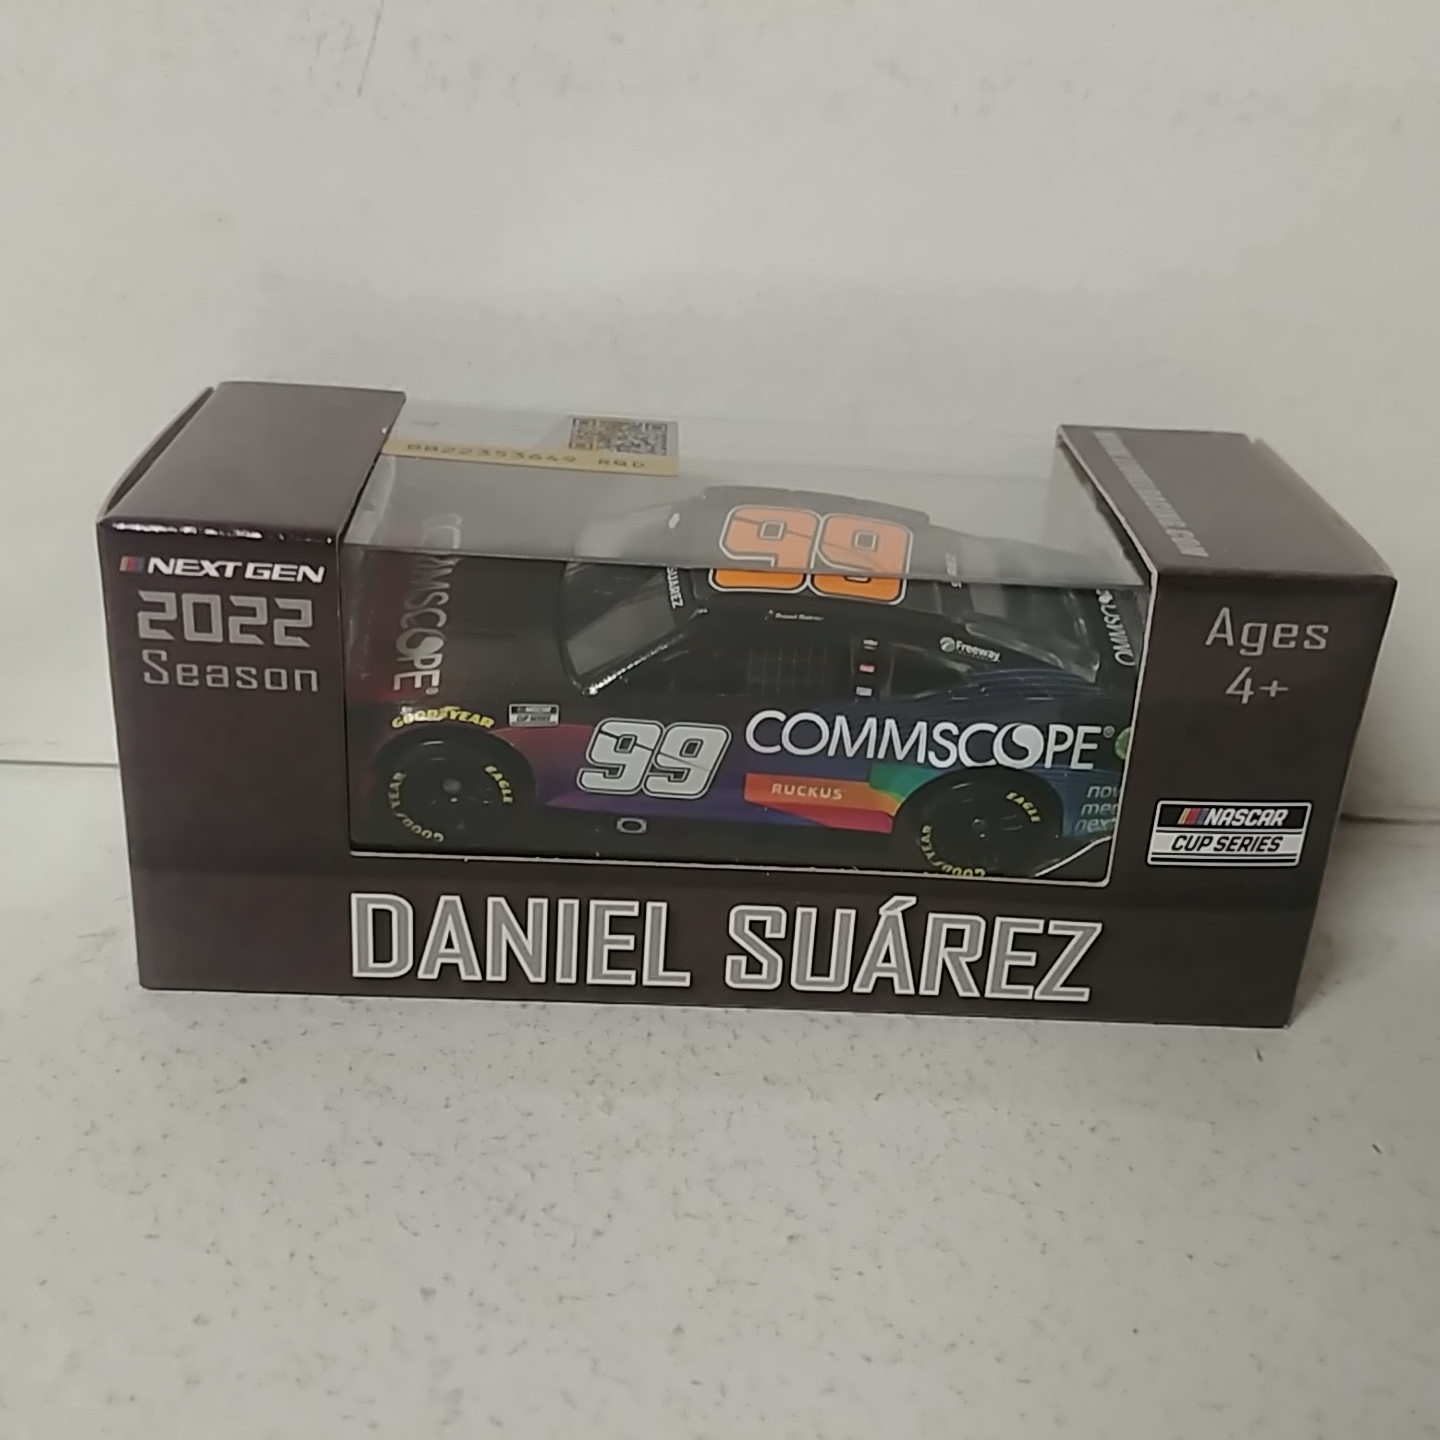 2022 Daniel Suarez 1/64th Commscope "Next Gen" Camaro